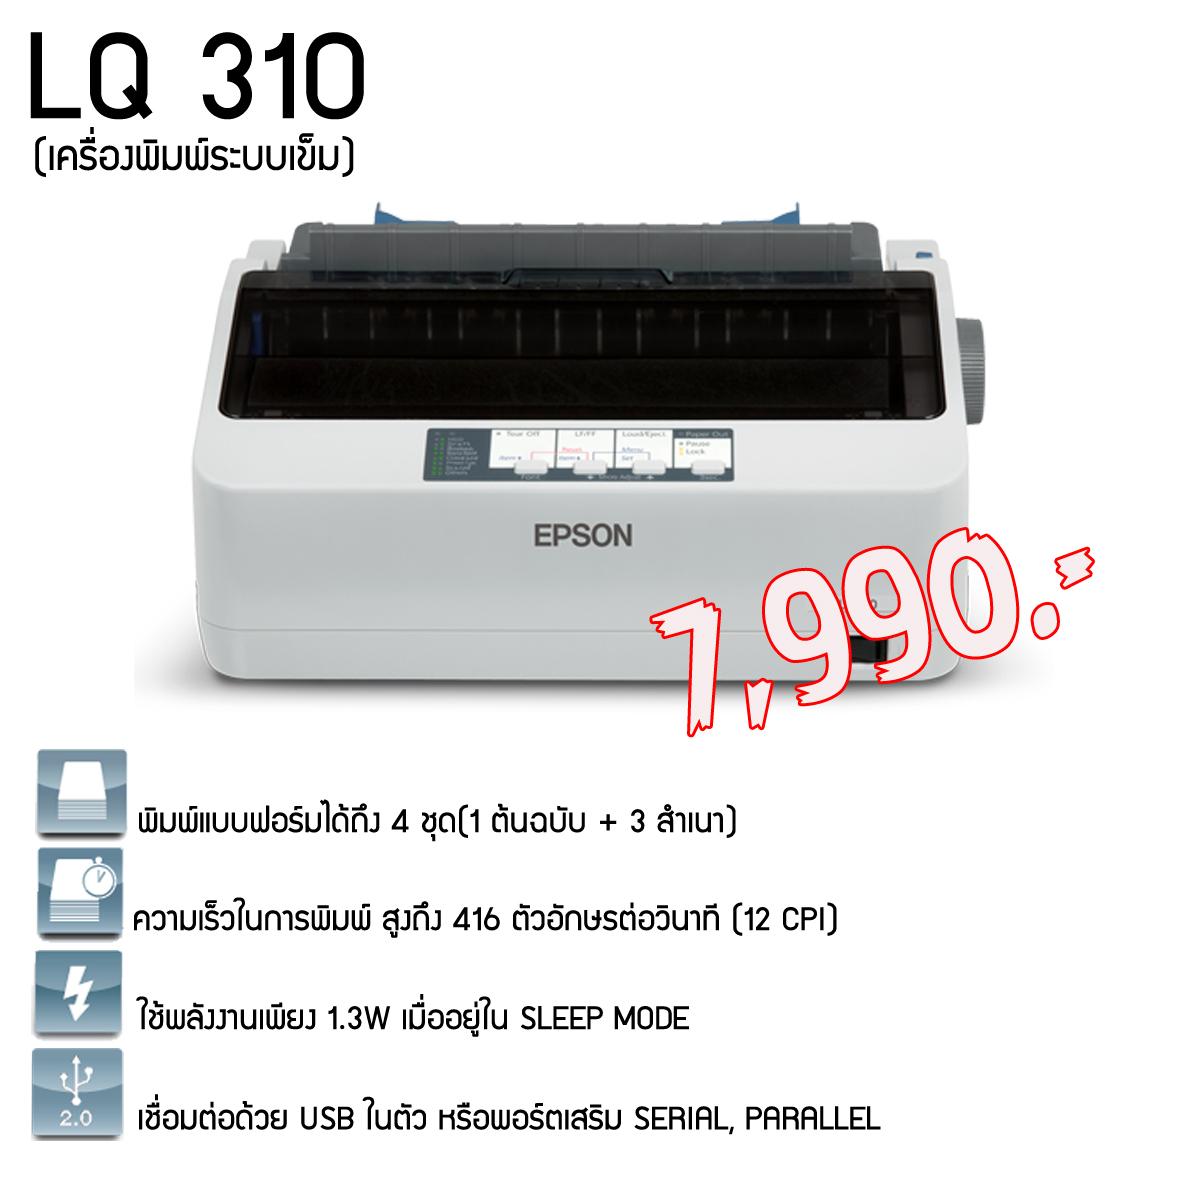 PRINTER (ปริ้นเตอร์) EPSON LQ310 DOT MATRIX  